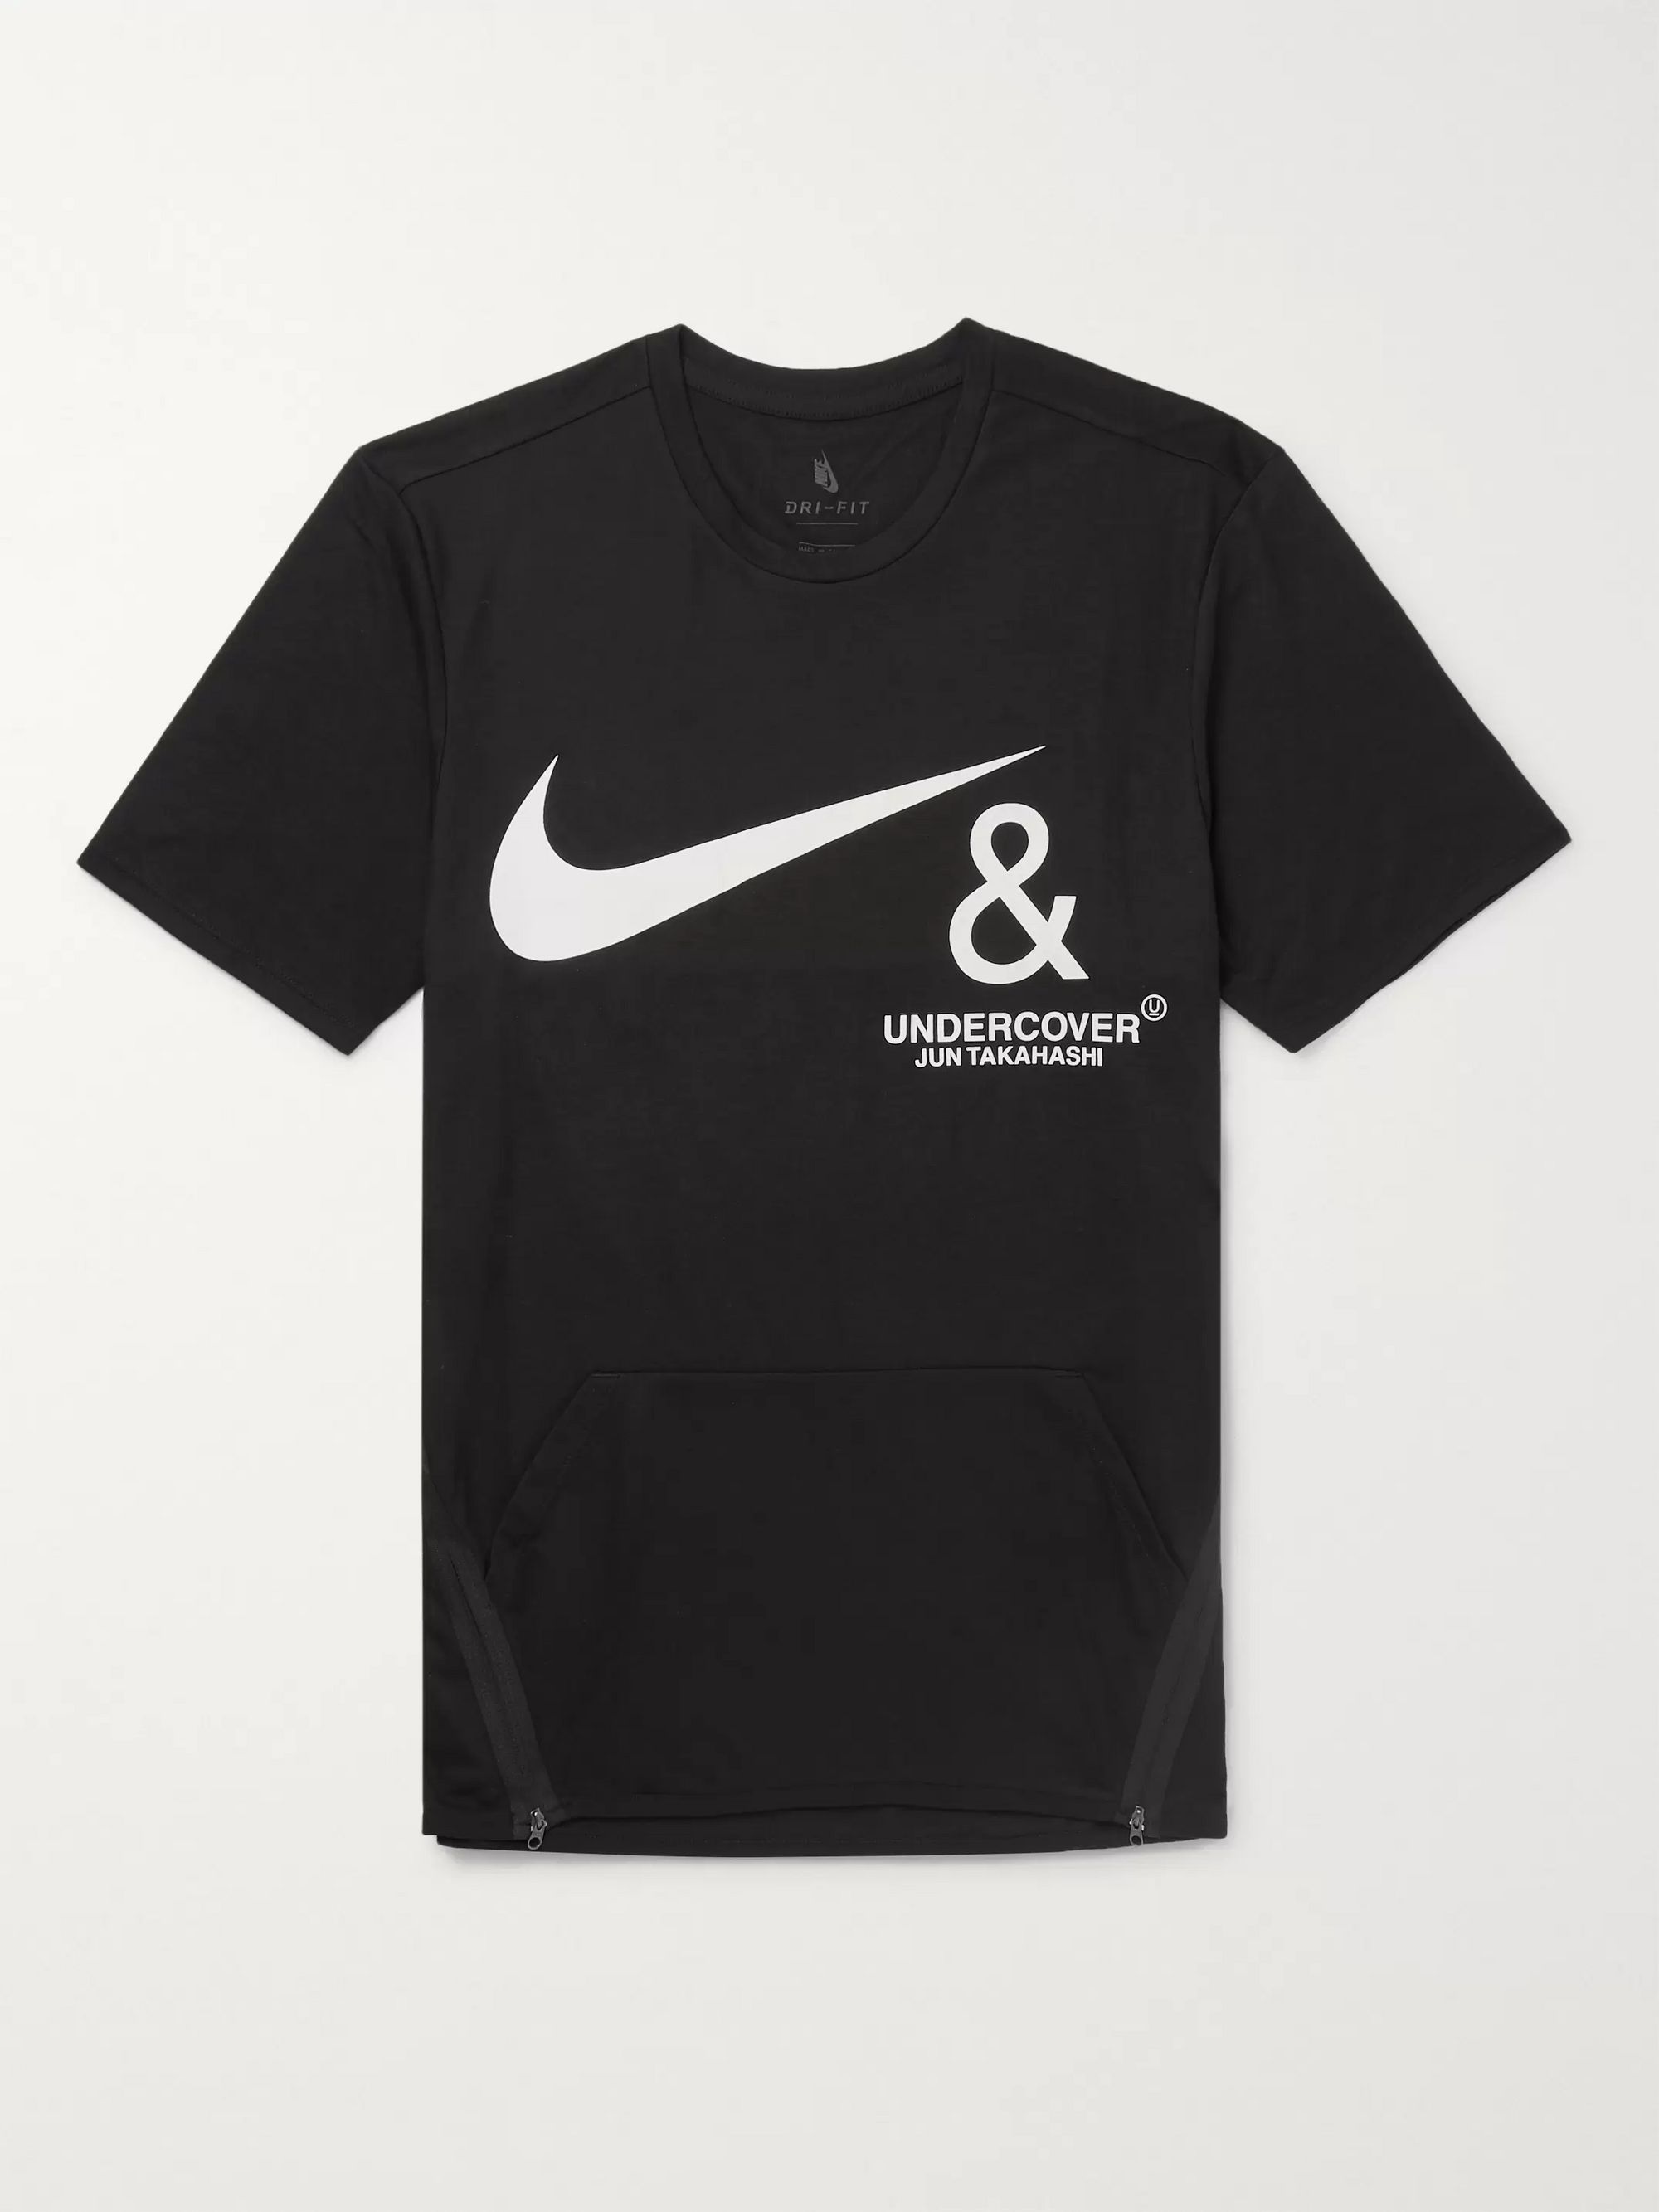 Nike Golf Shirt Size Chart